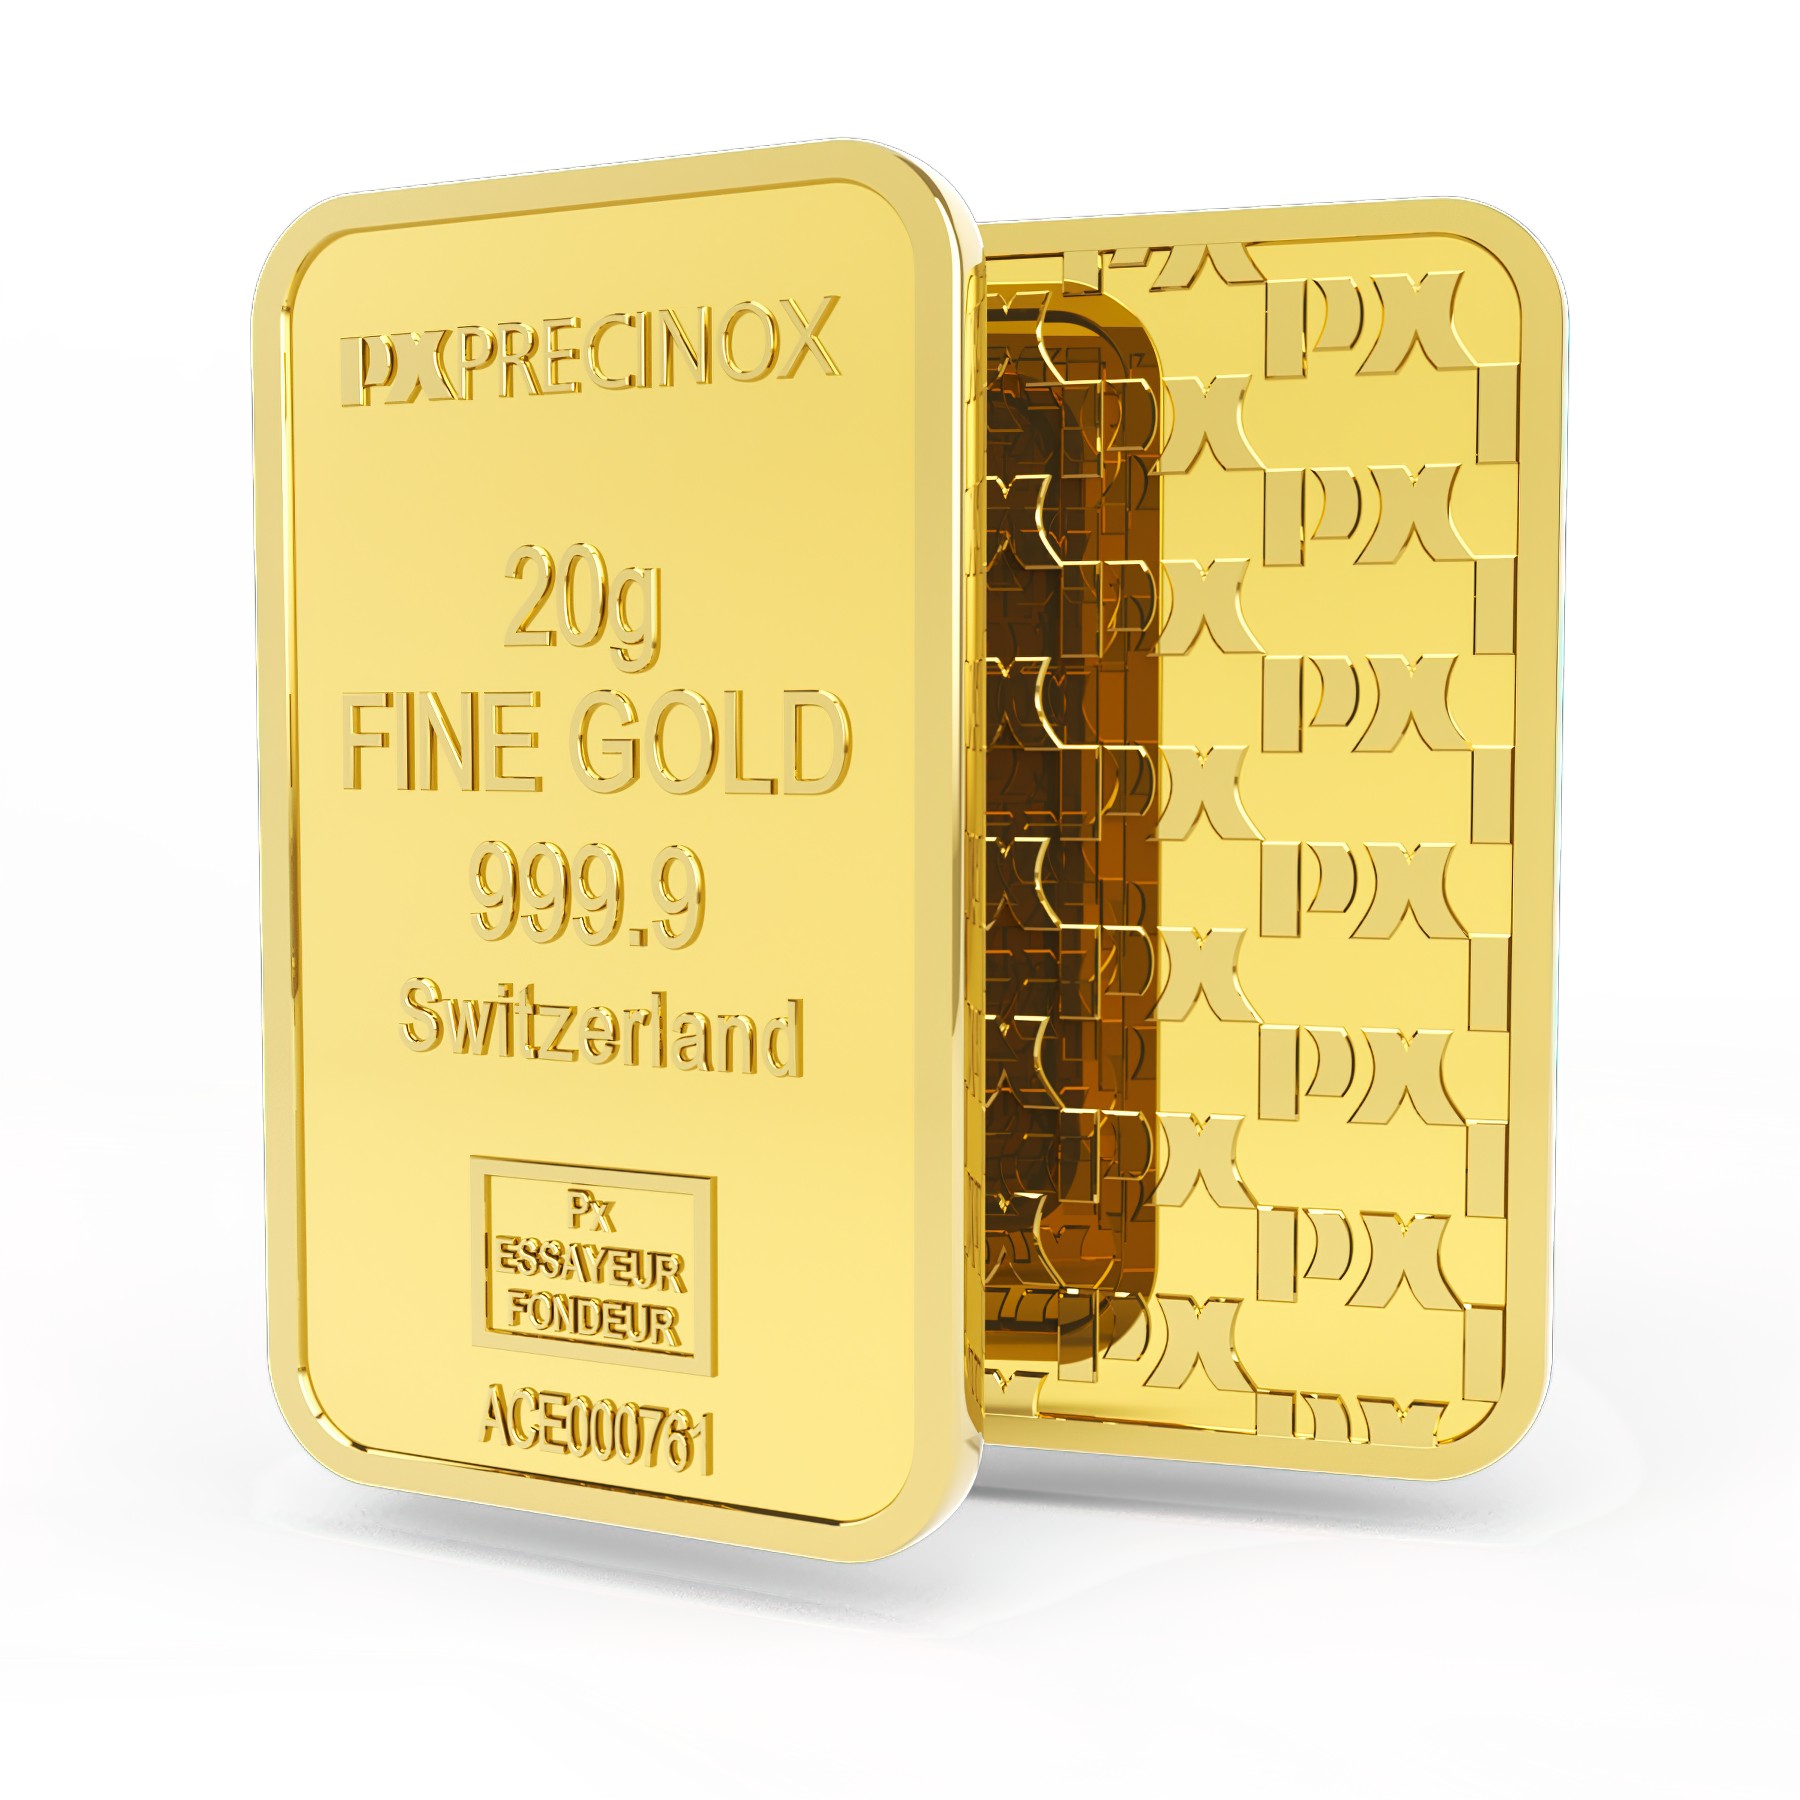 Aranyrúd 20 gr, Svájc, Fine Gold 999,9